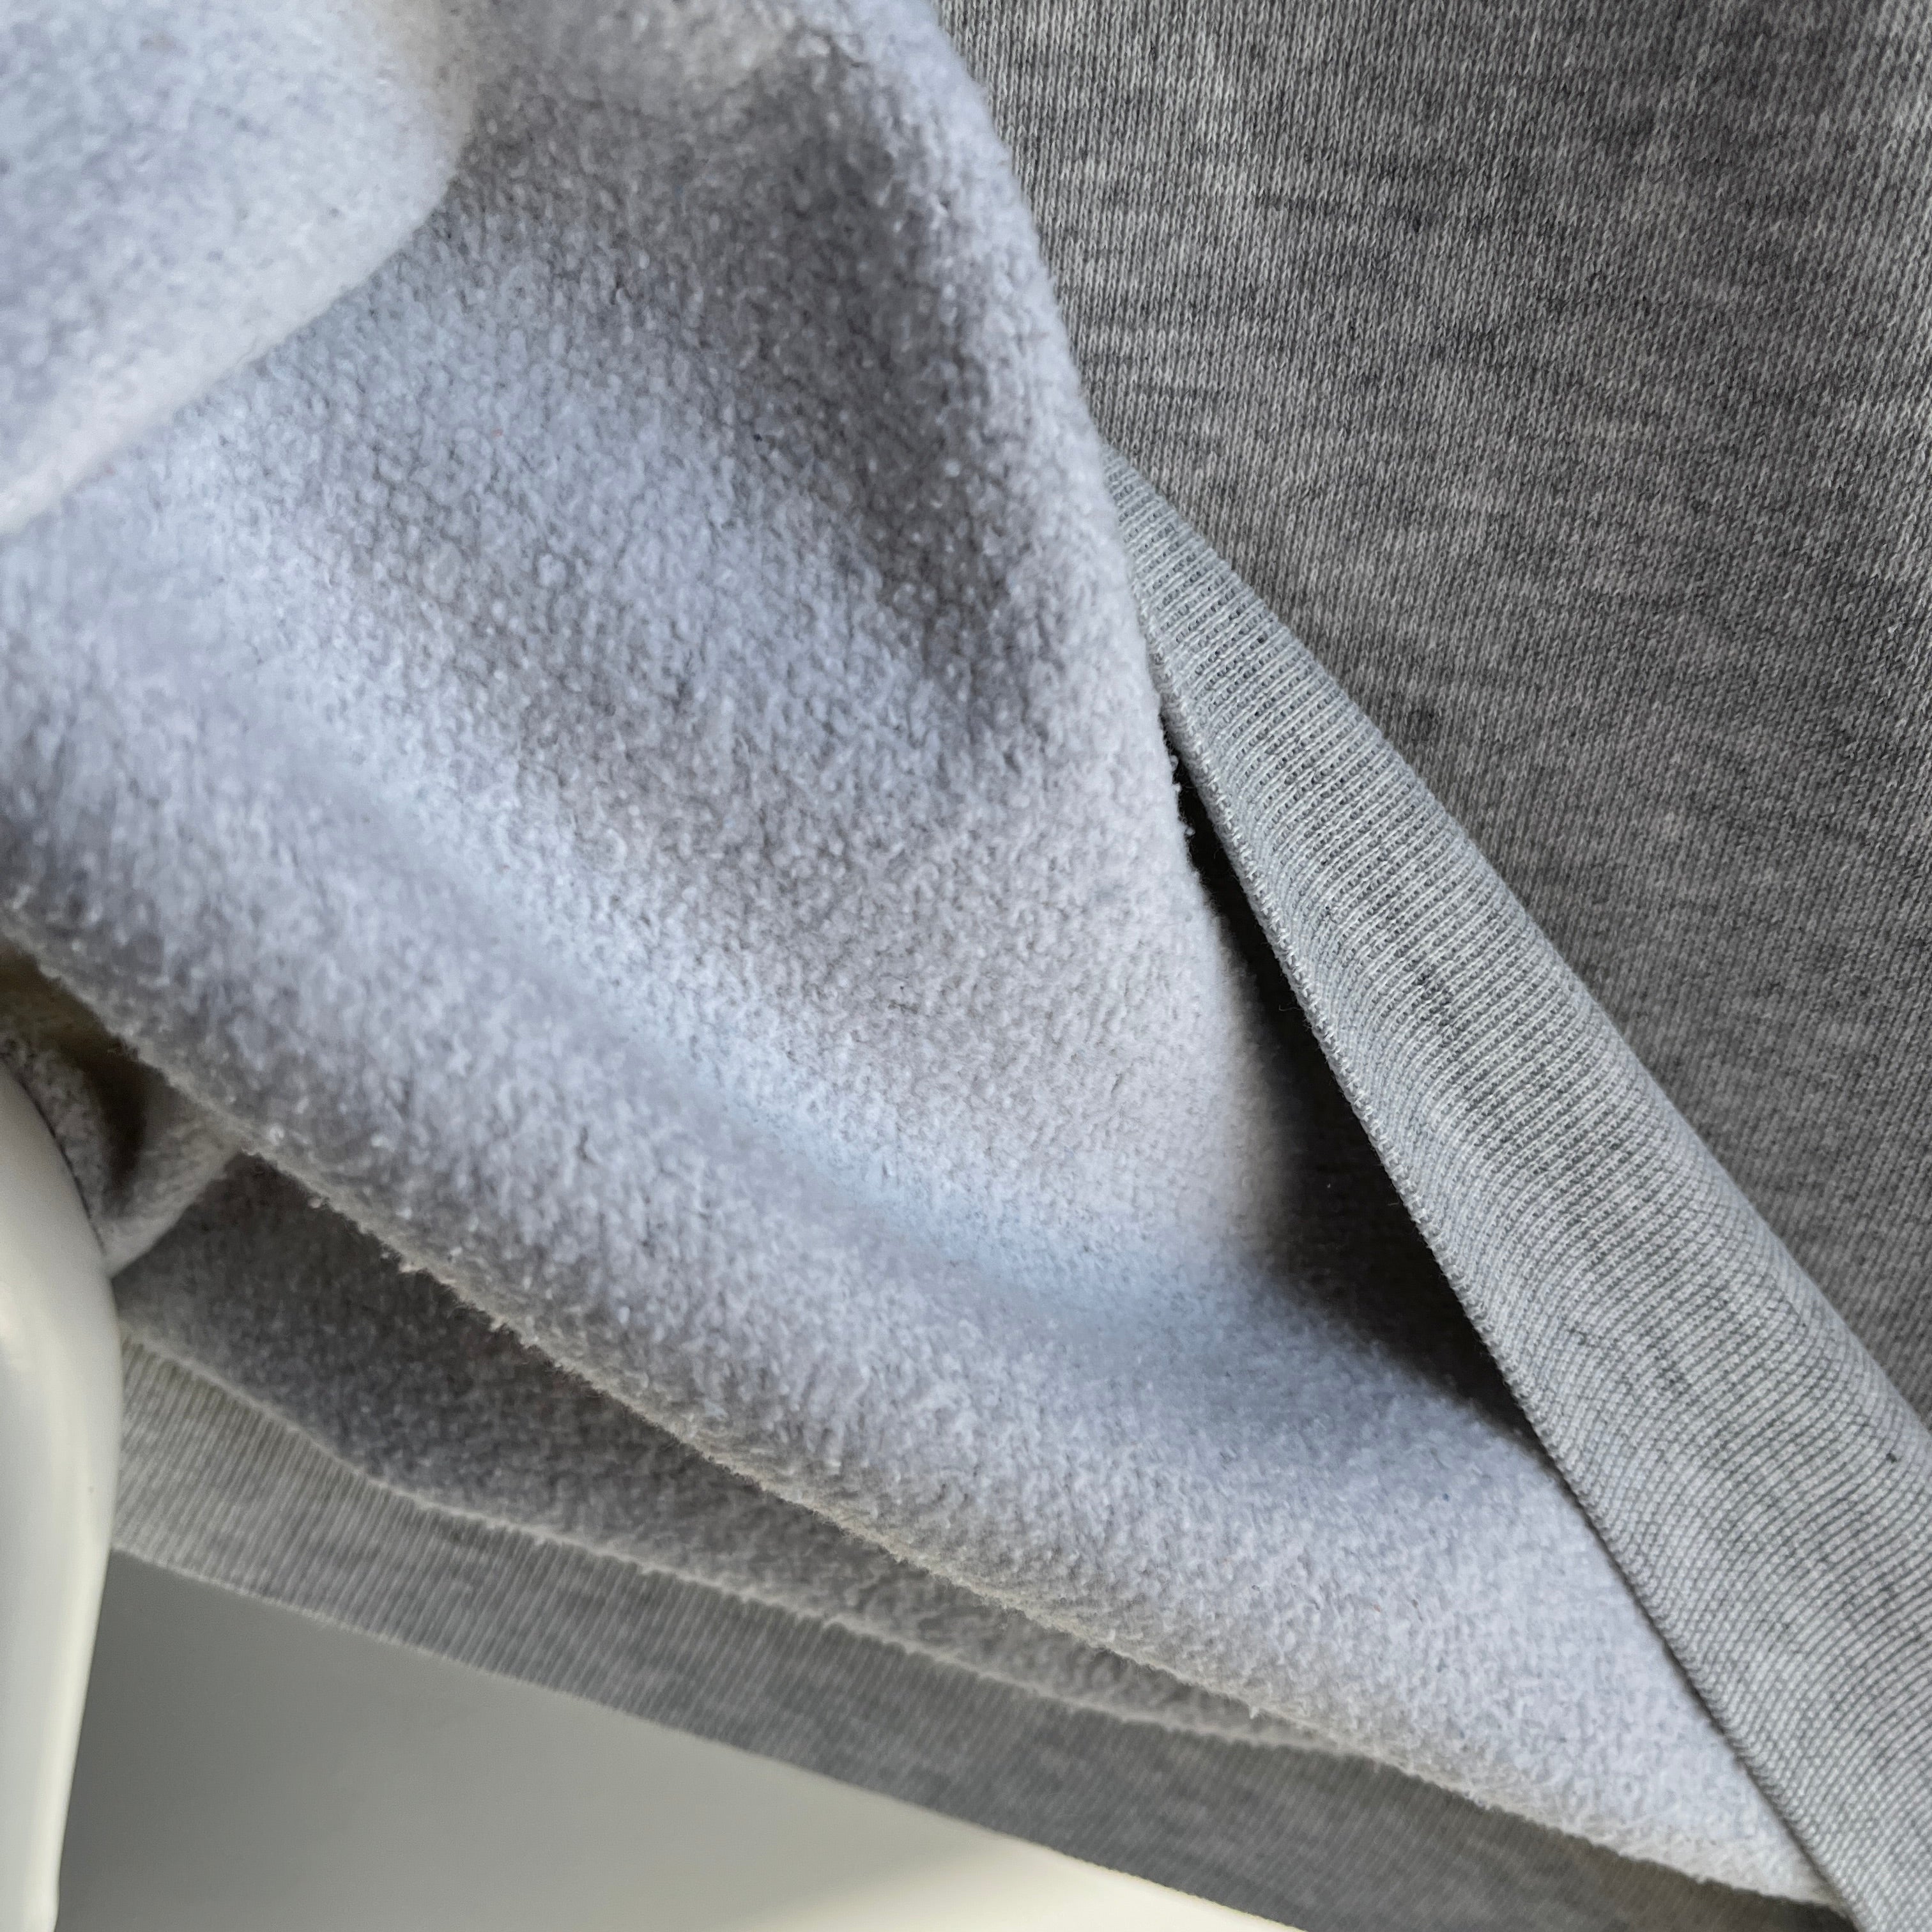 1980s Light Gray Split Collar Worn Out Gray Sweatshirt